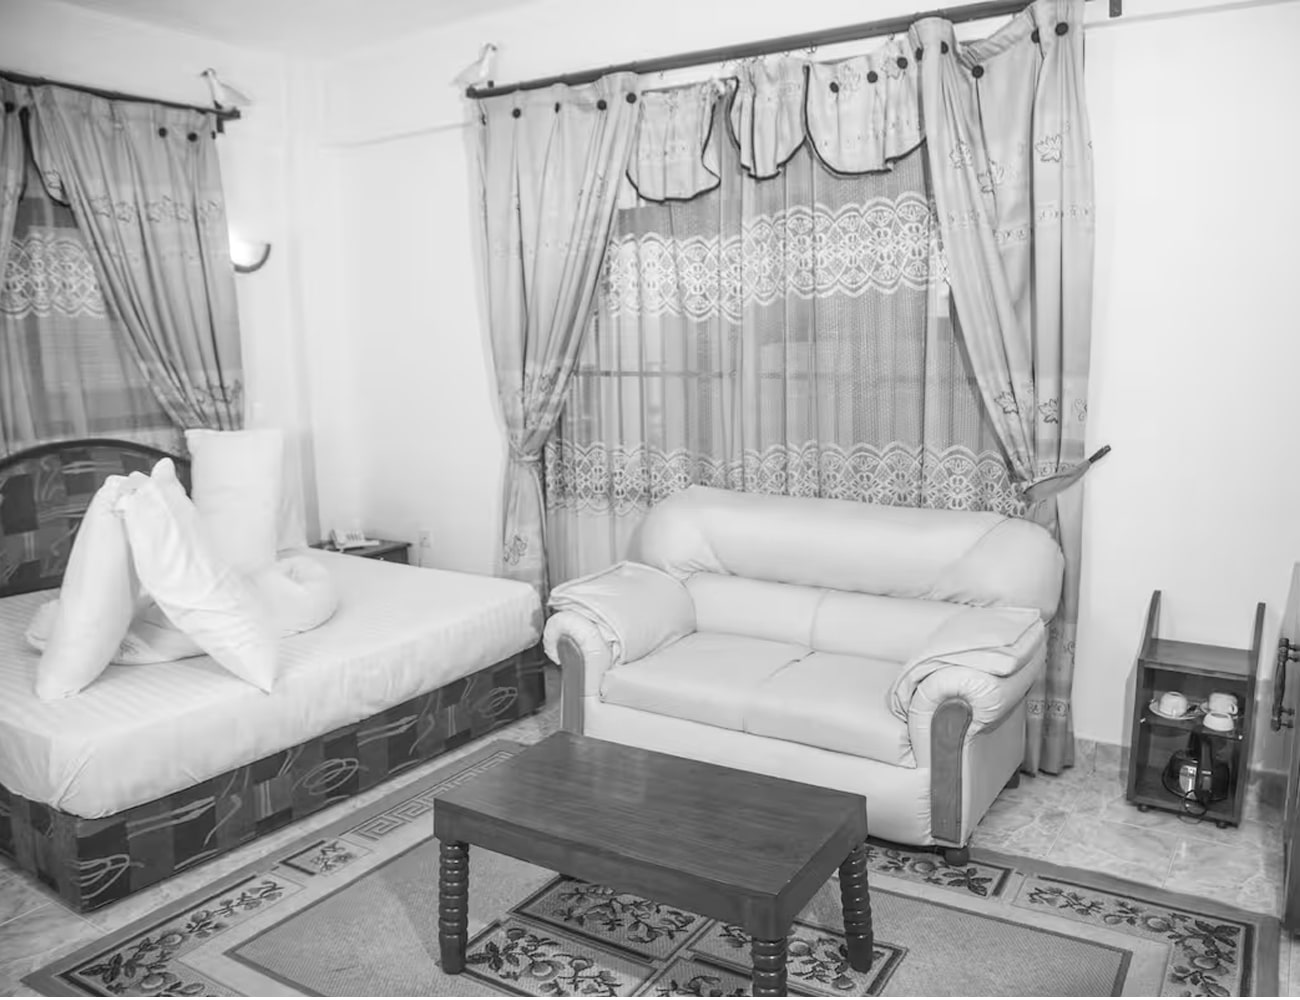 Bedrooms at Natron Palace Hotel